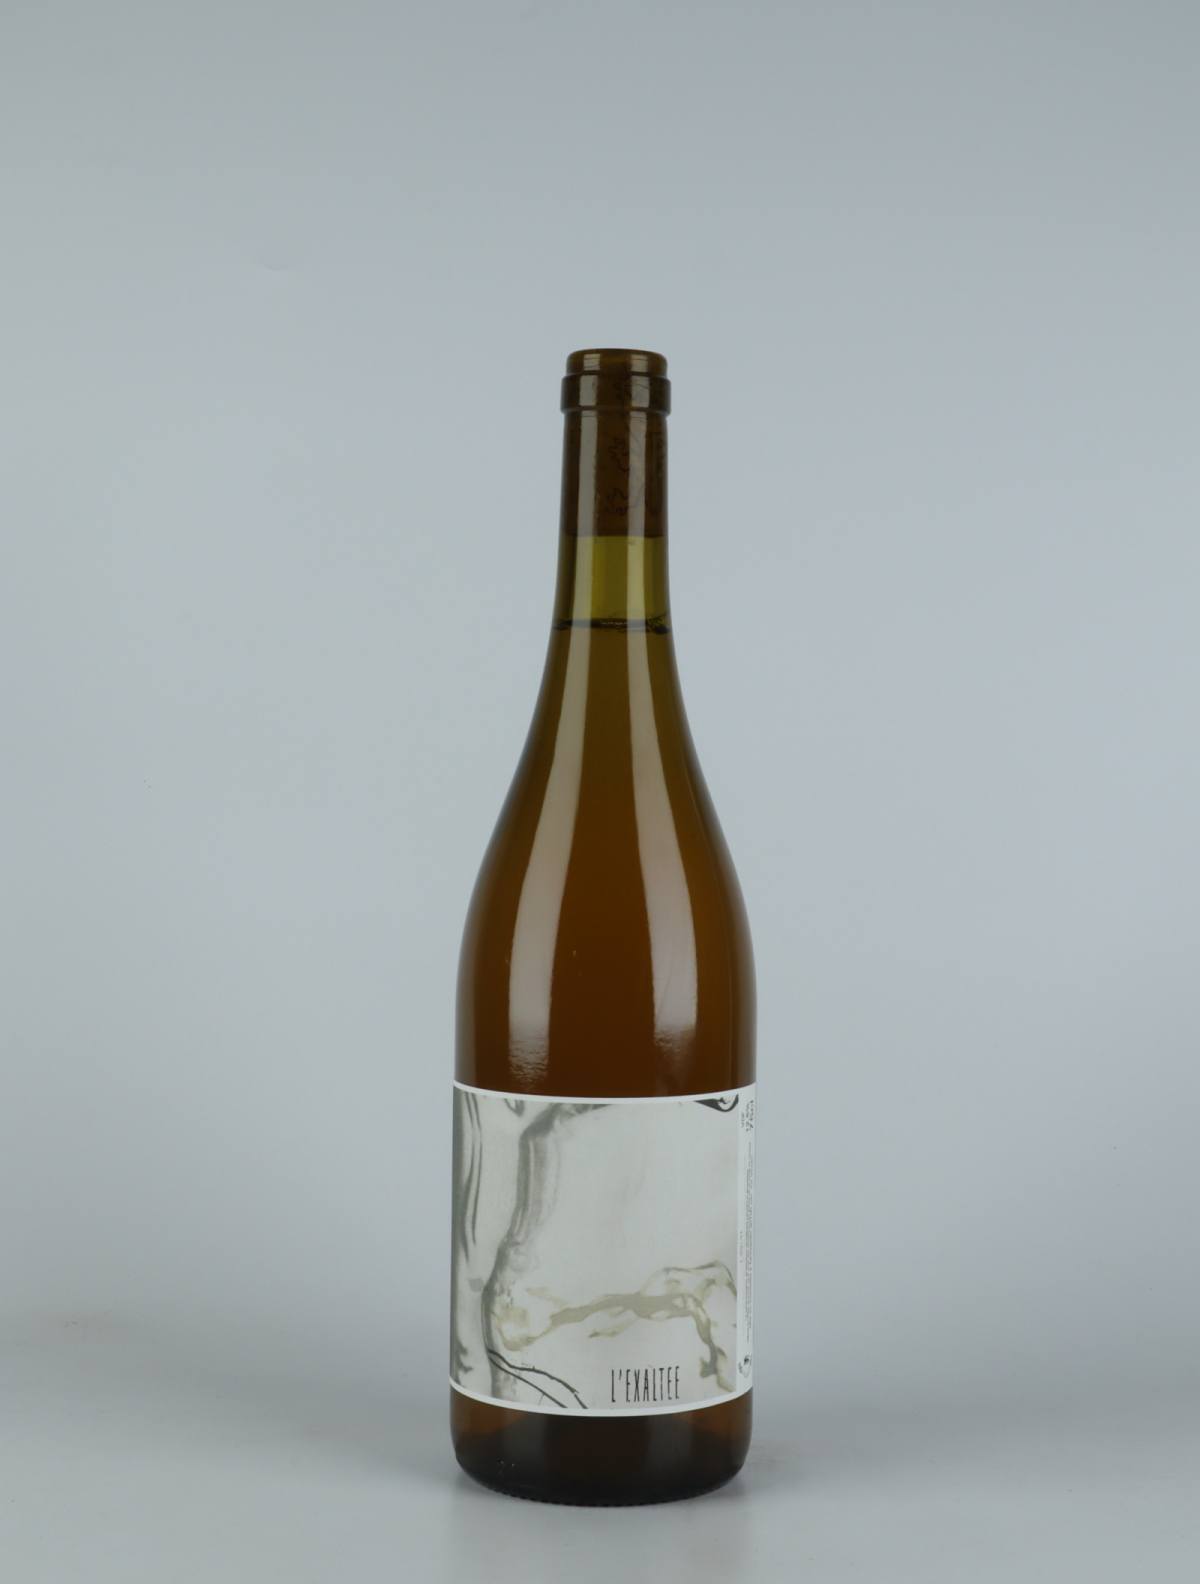 A bottle 2021 Exaltée White wine from Ad Vinum, Gard in France